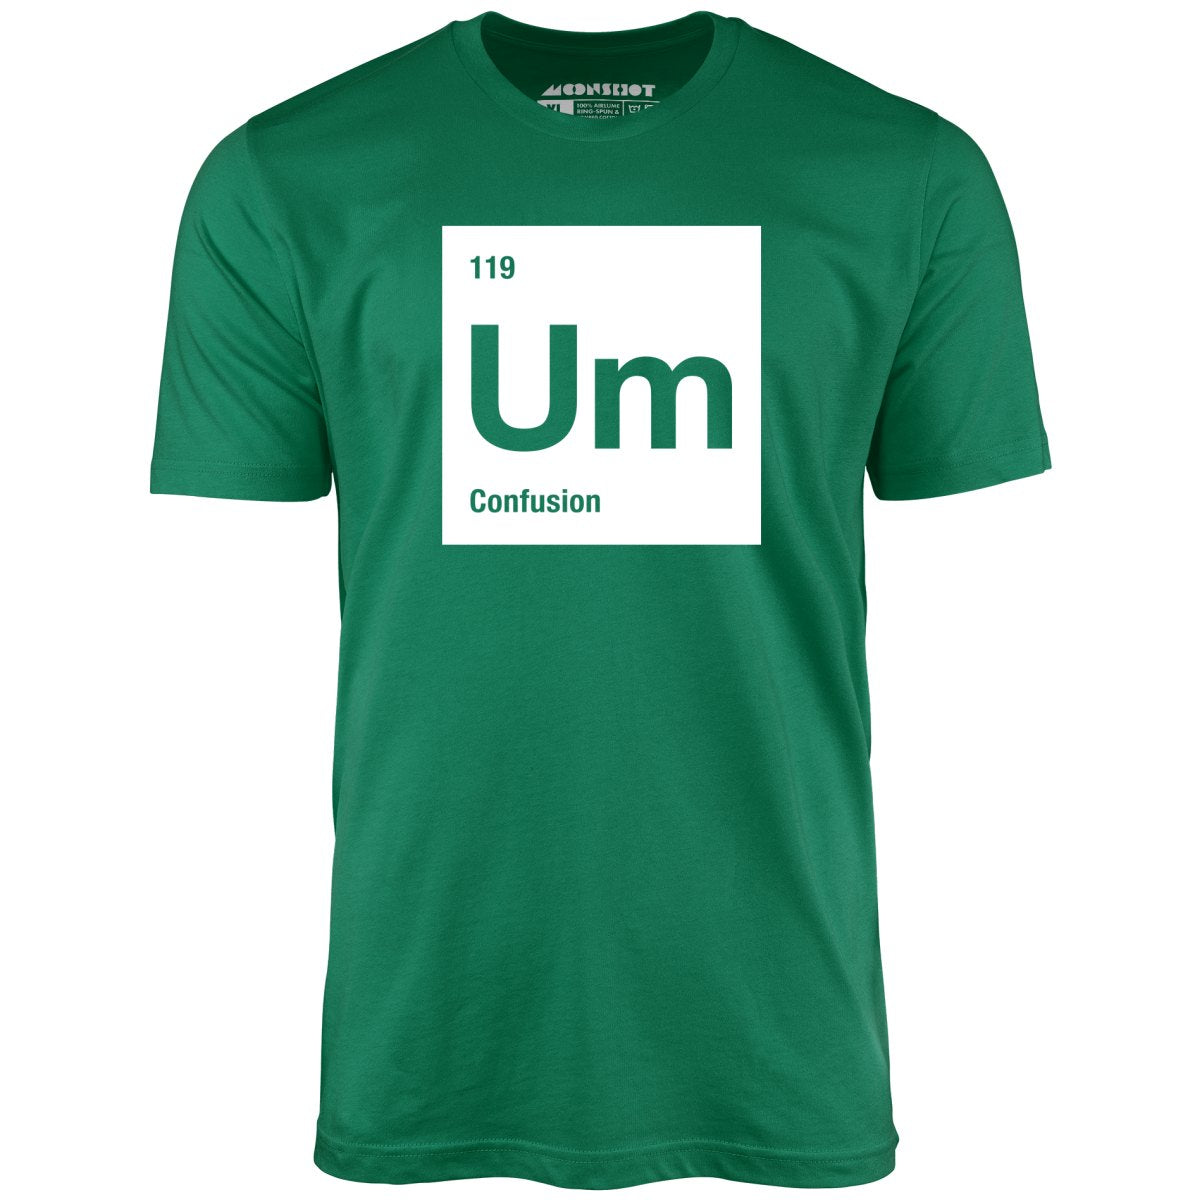 Um - The Element of Confusion - Unisex T-Shirt